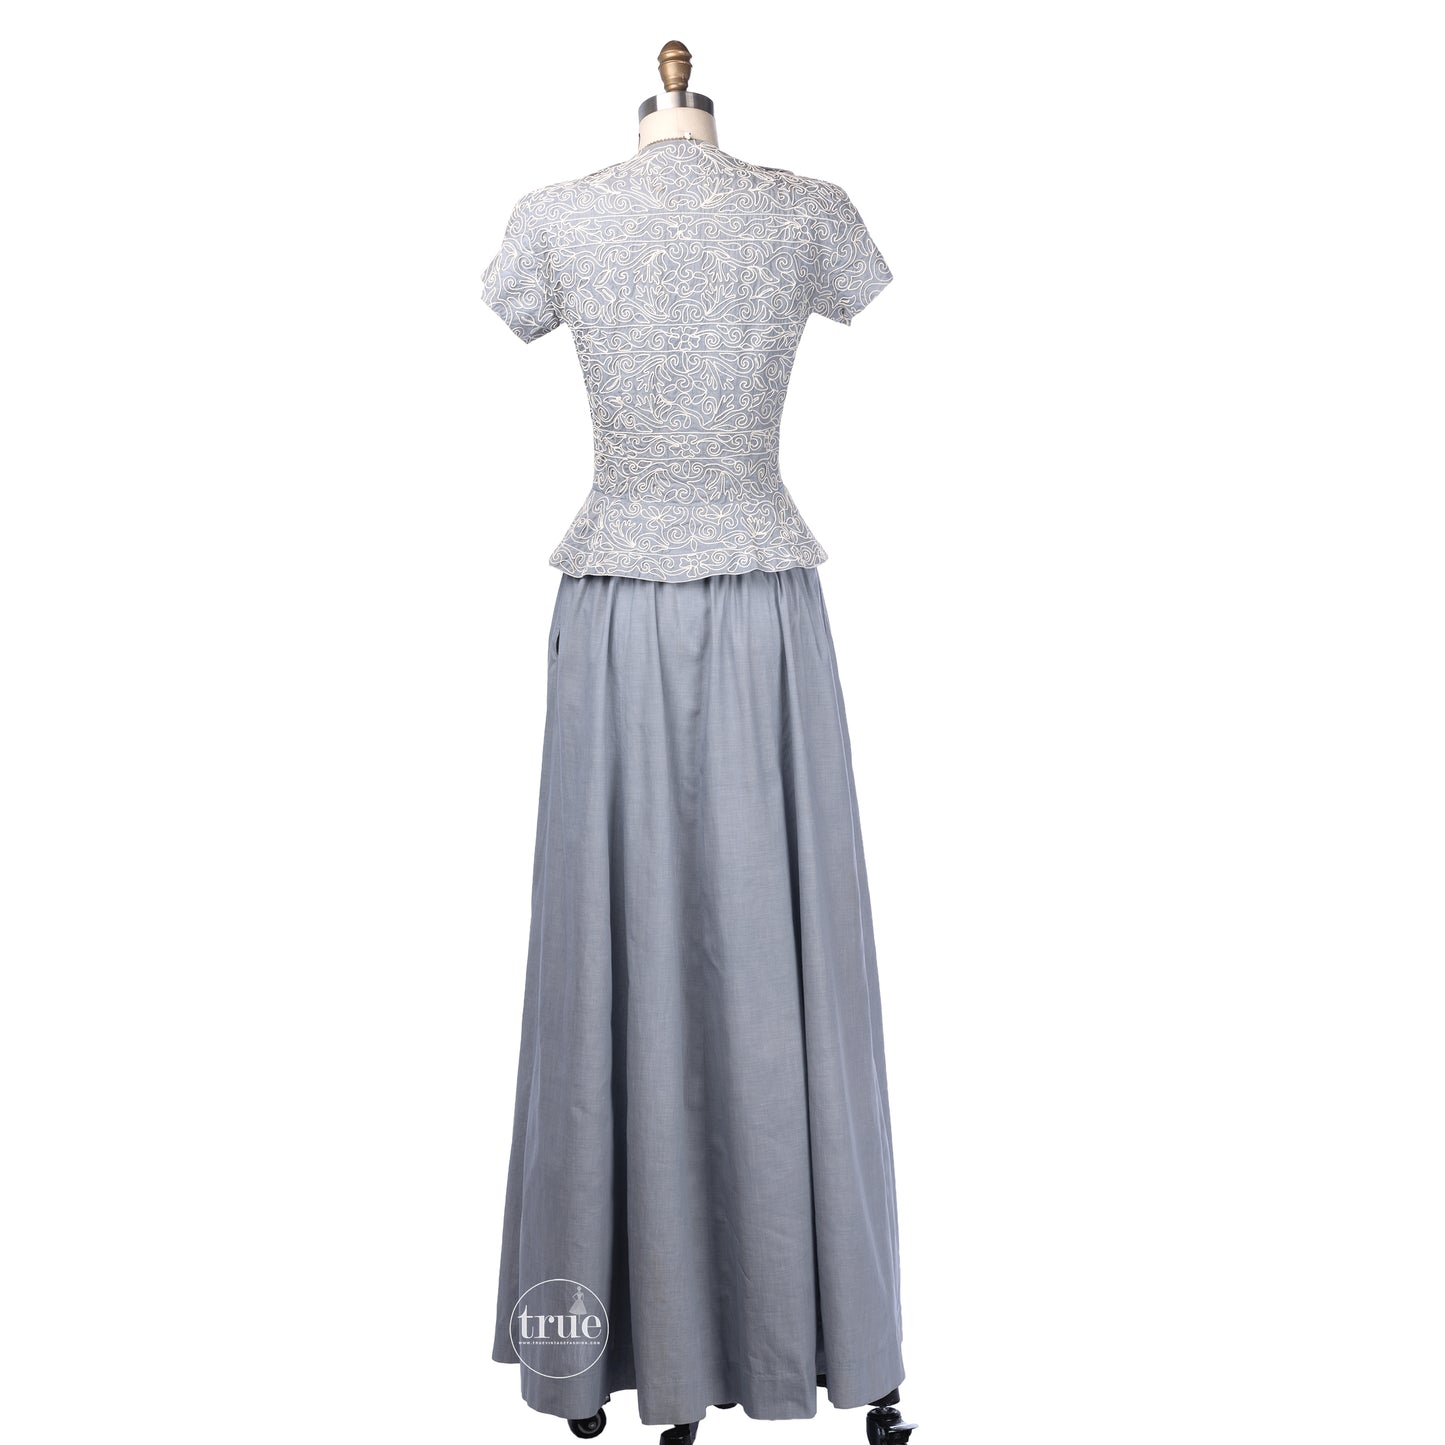 vintage 1940's dress ...rare early Pauline Trigeré 2 piece soutache chambray jacket and skirt ensemble